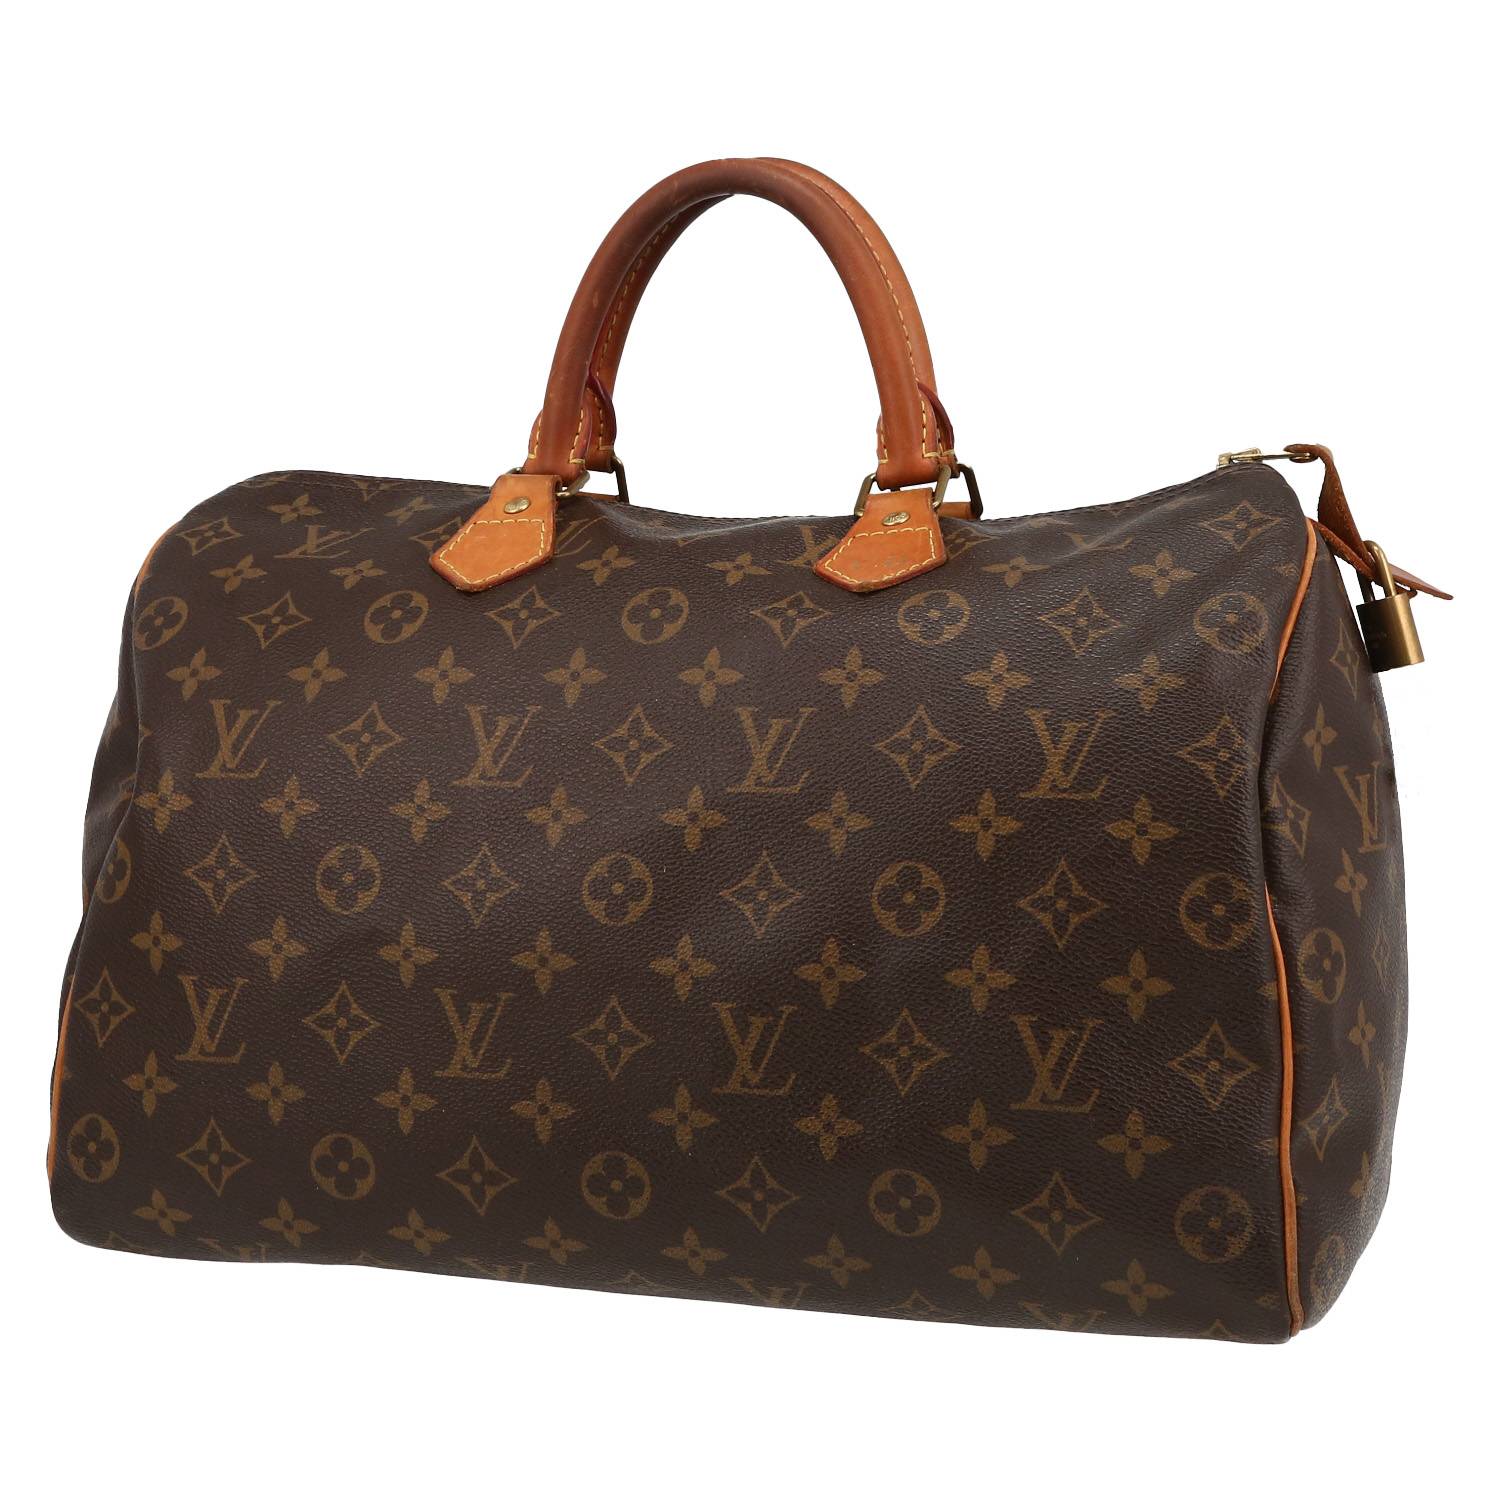 Louis Vuitton Limited Edition Monogramouflage Canvas Speedy 35 Satchel, Louis Vuitton Handbags